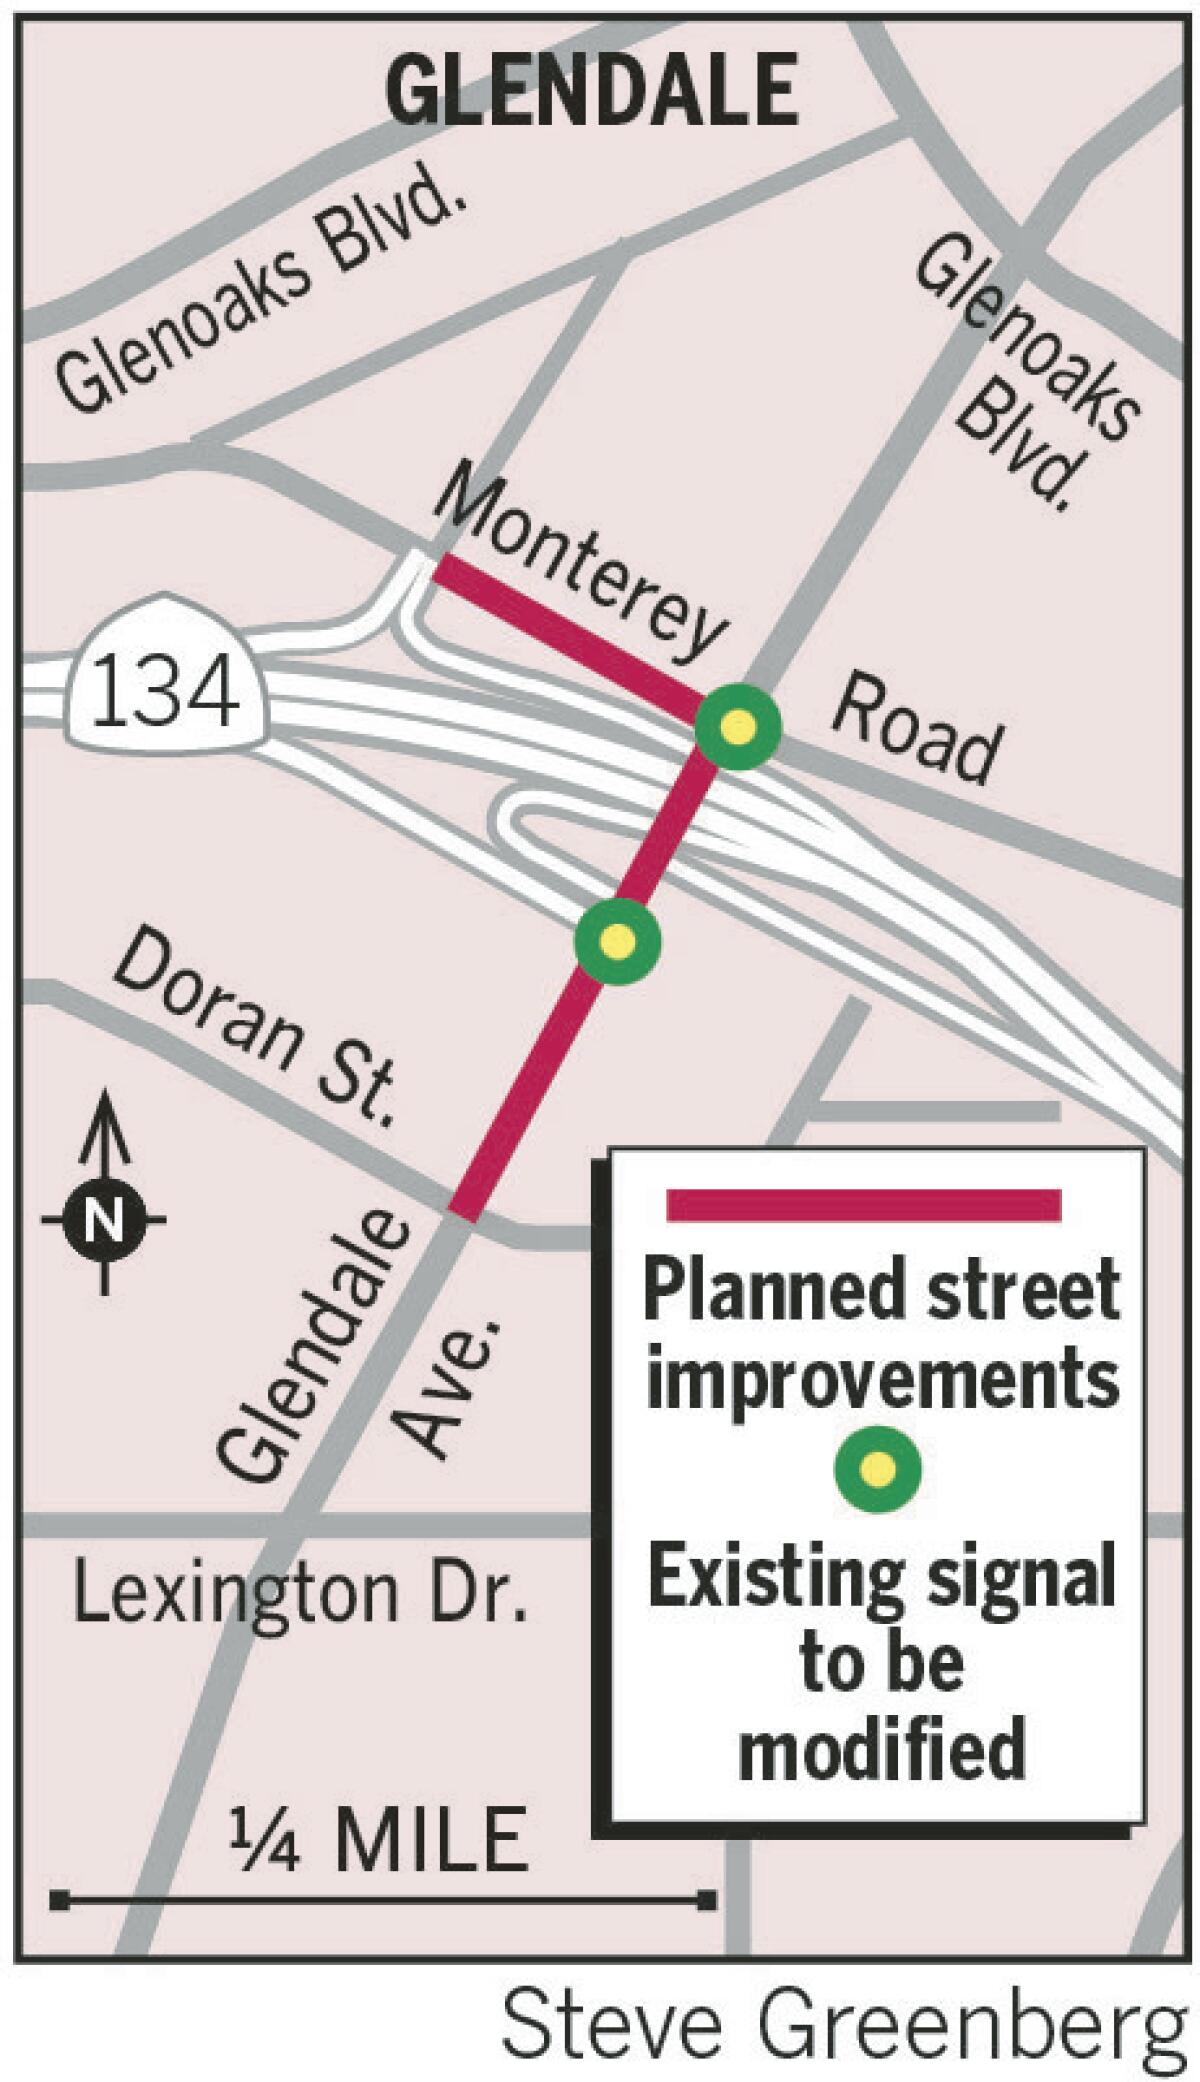 Planned street improvements along Glendale Ave.